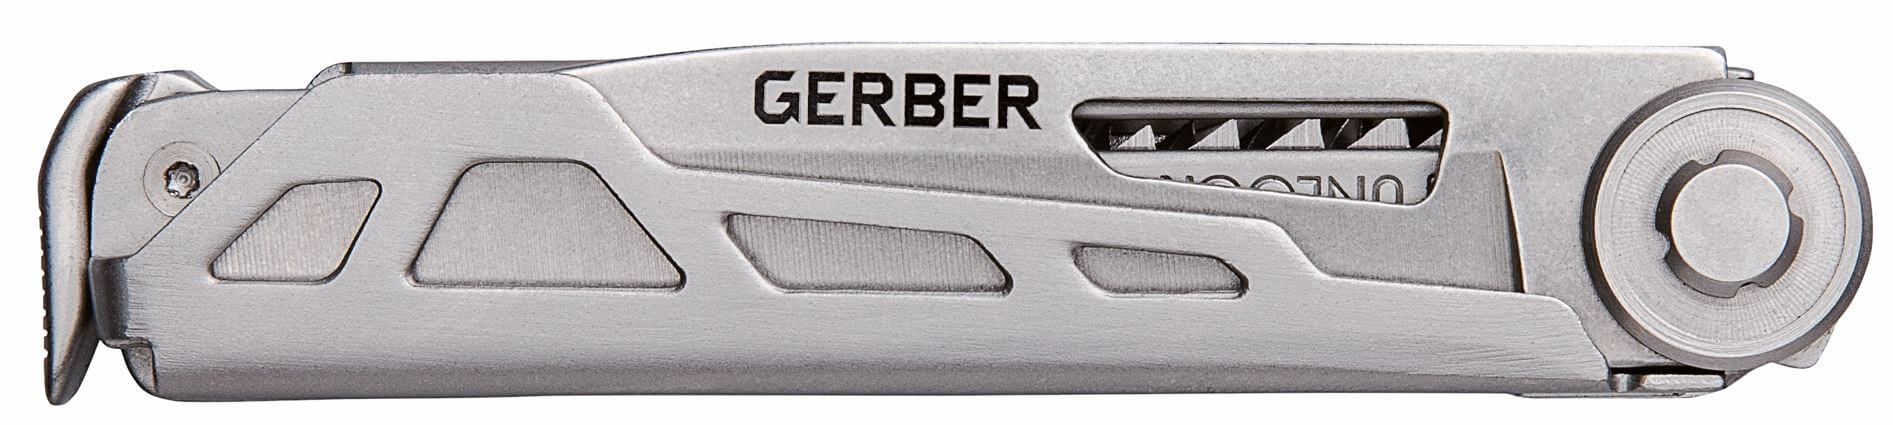 Gerber Multitool Armbar Trade silber